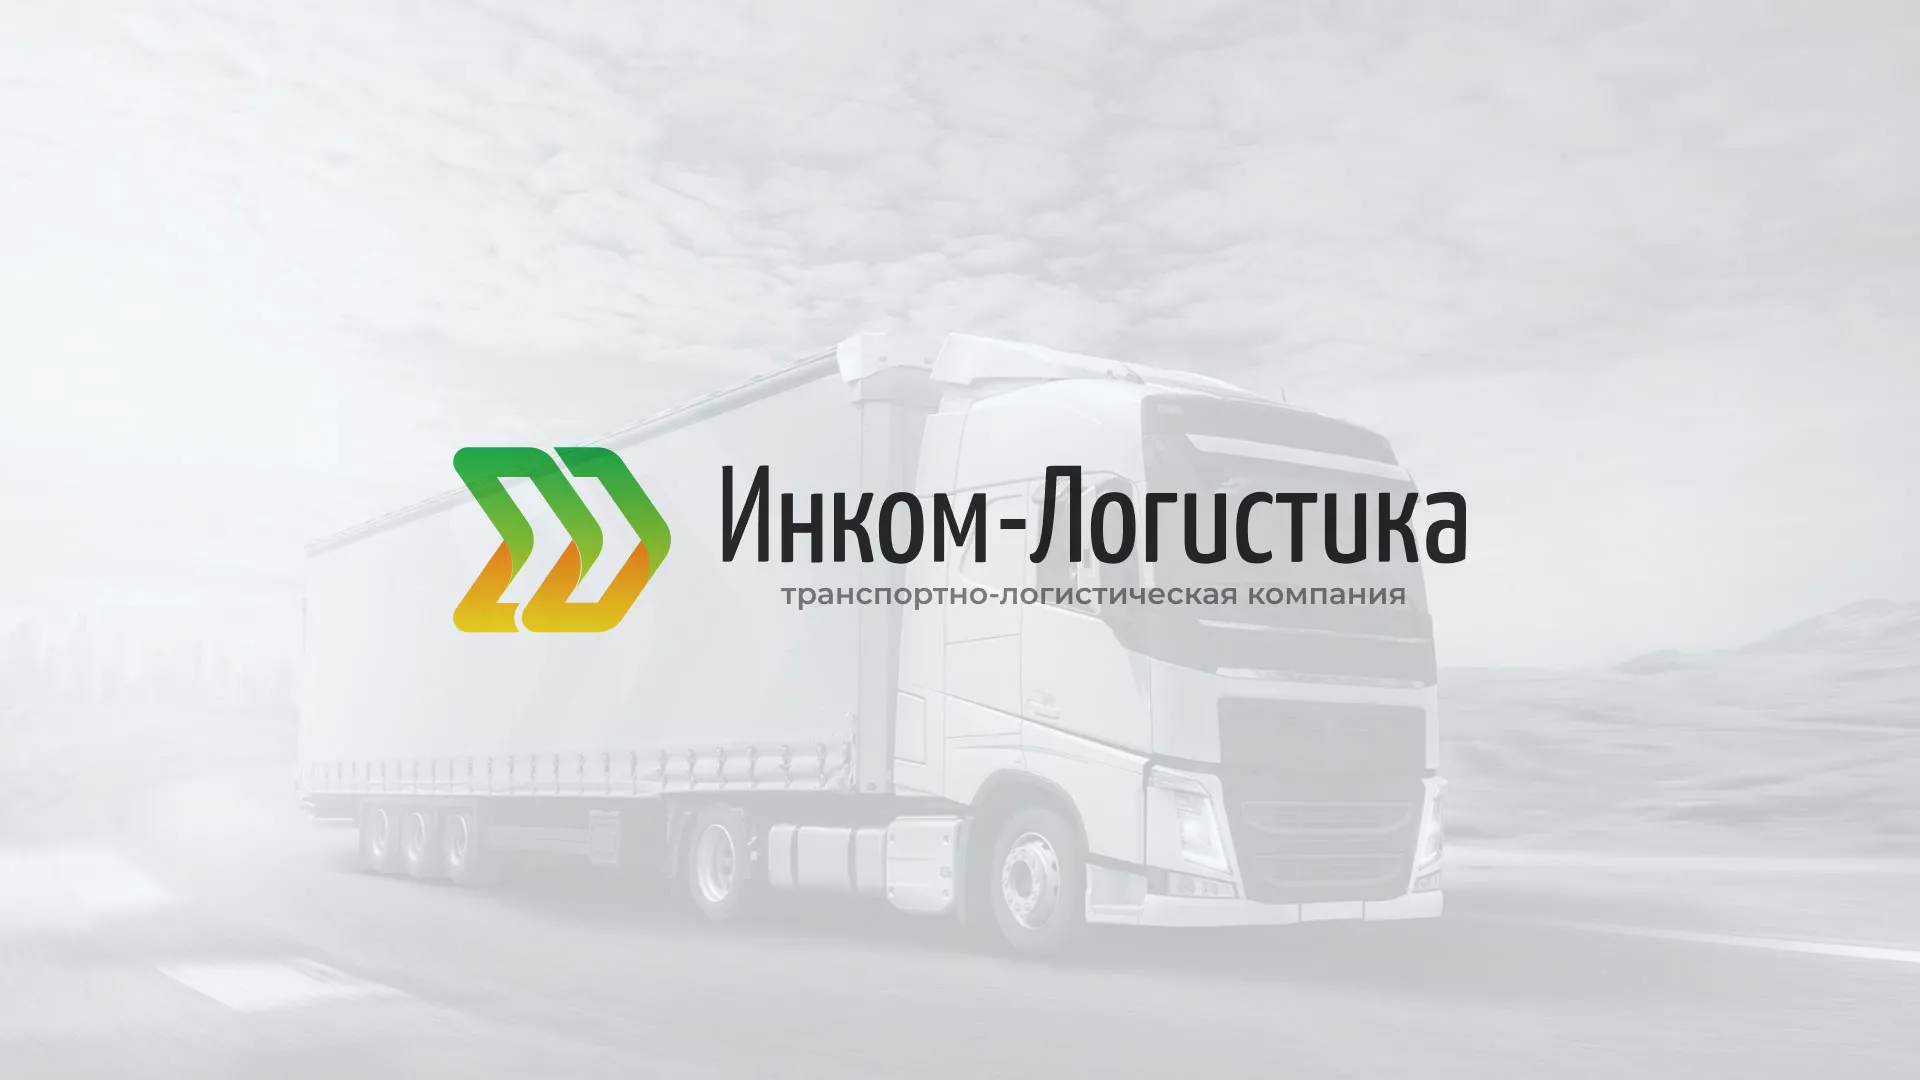 Разработка логотипа и сайта компании «Инком-Логистика» в Ростове-на-Дону